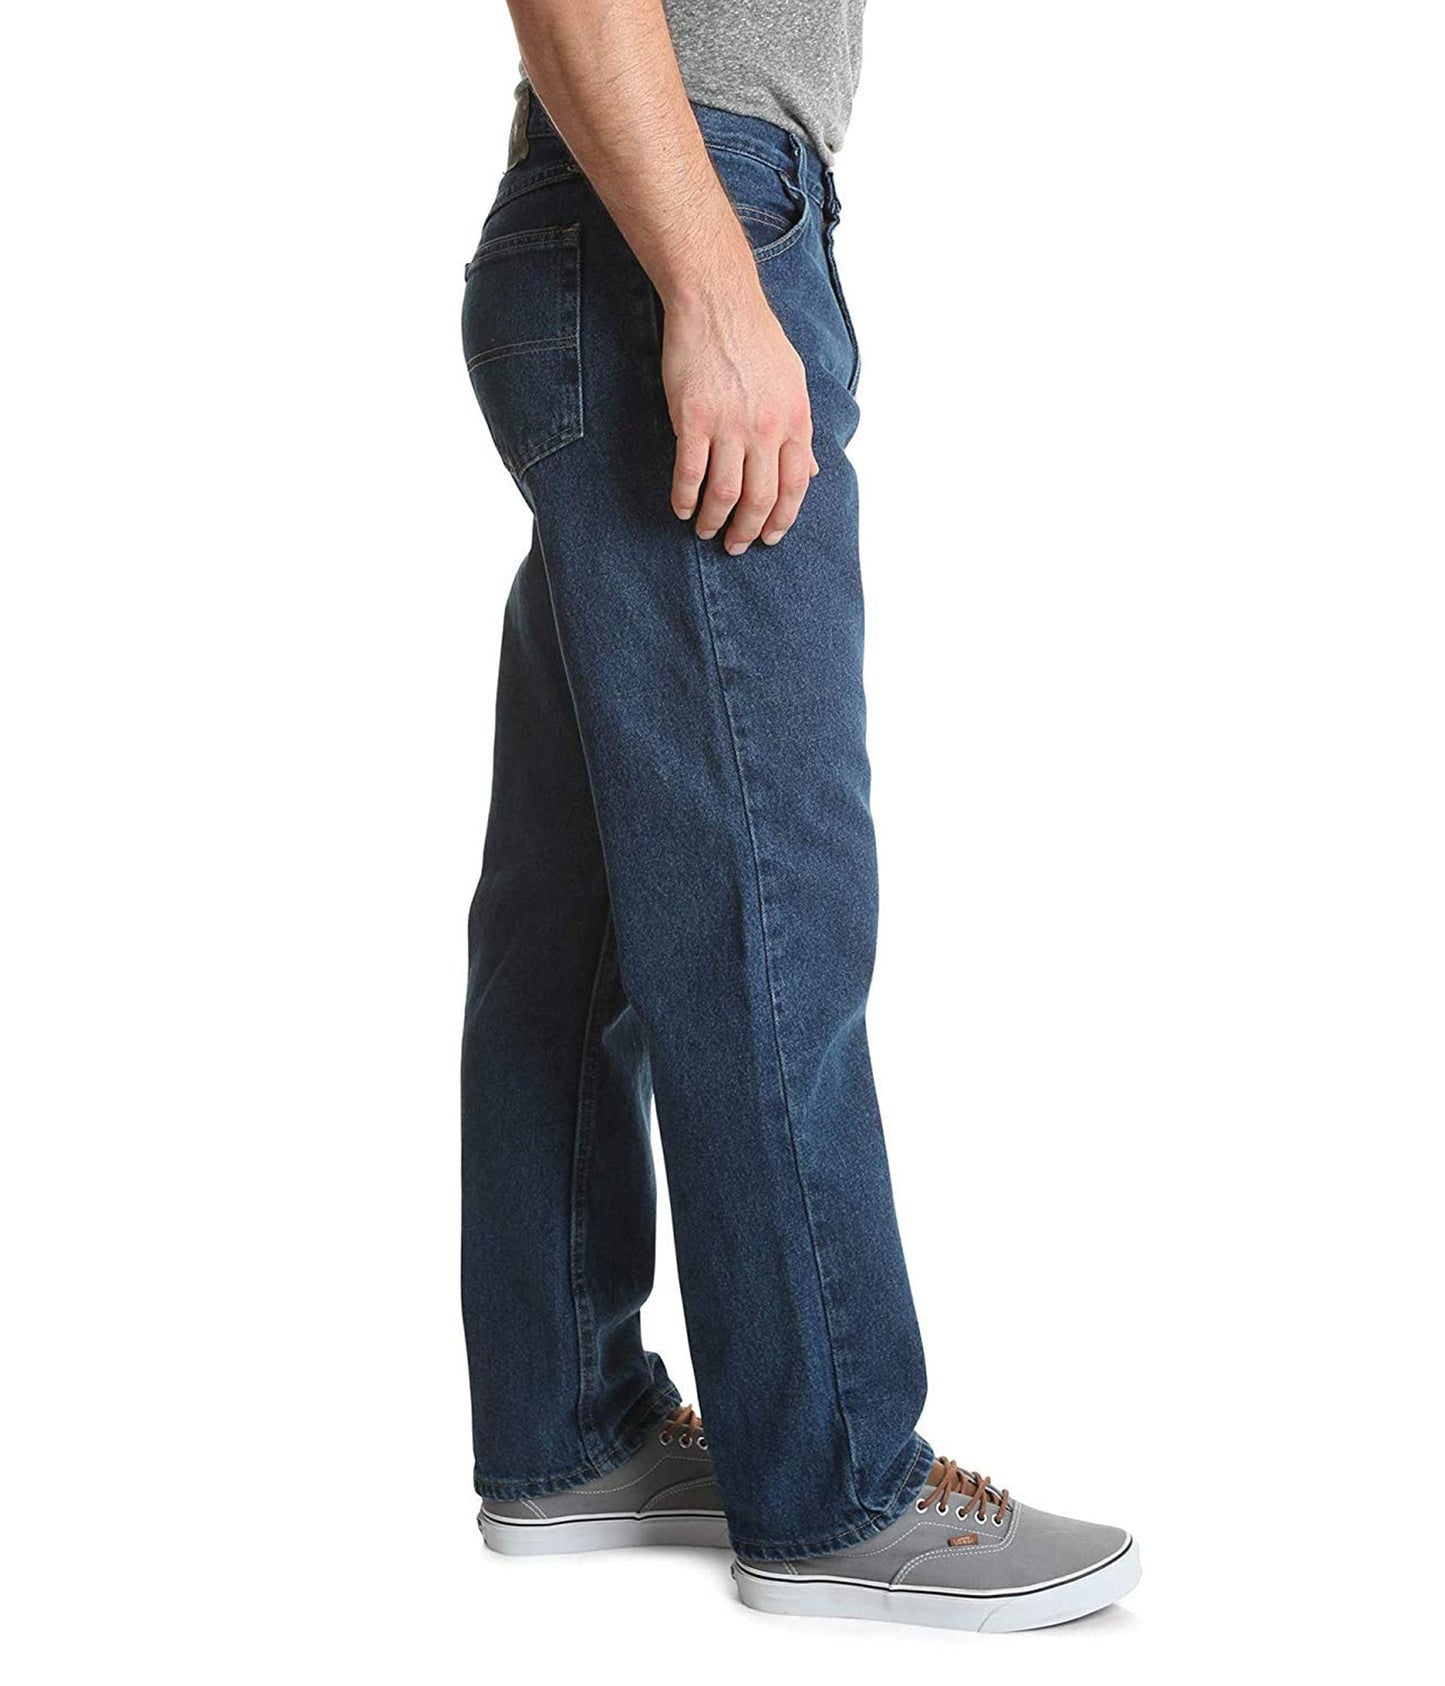 Wrangler Authentics Men's Big & Tall Classic 5-Pocket Relaxed Fit Cotton Jean, Dark Stonewash, 54W x 30L